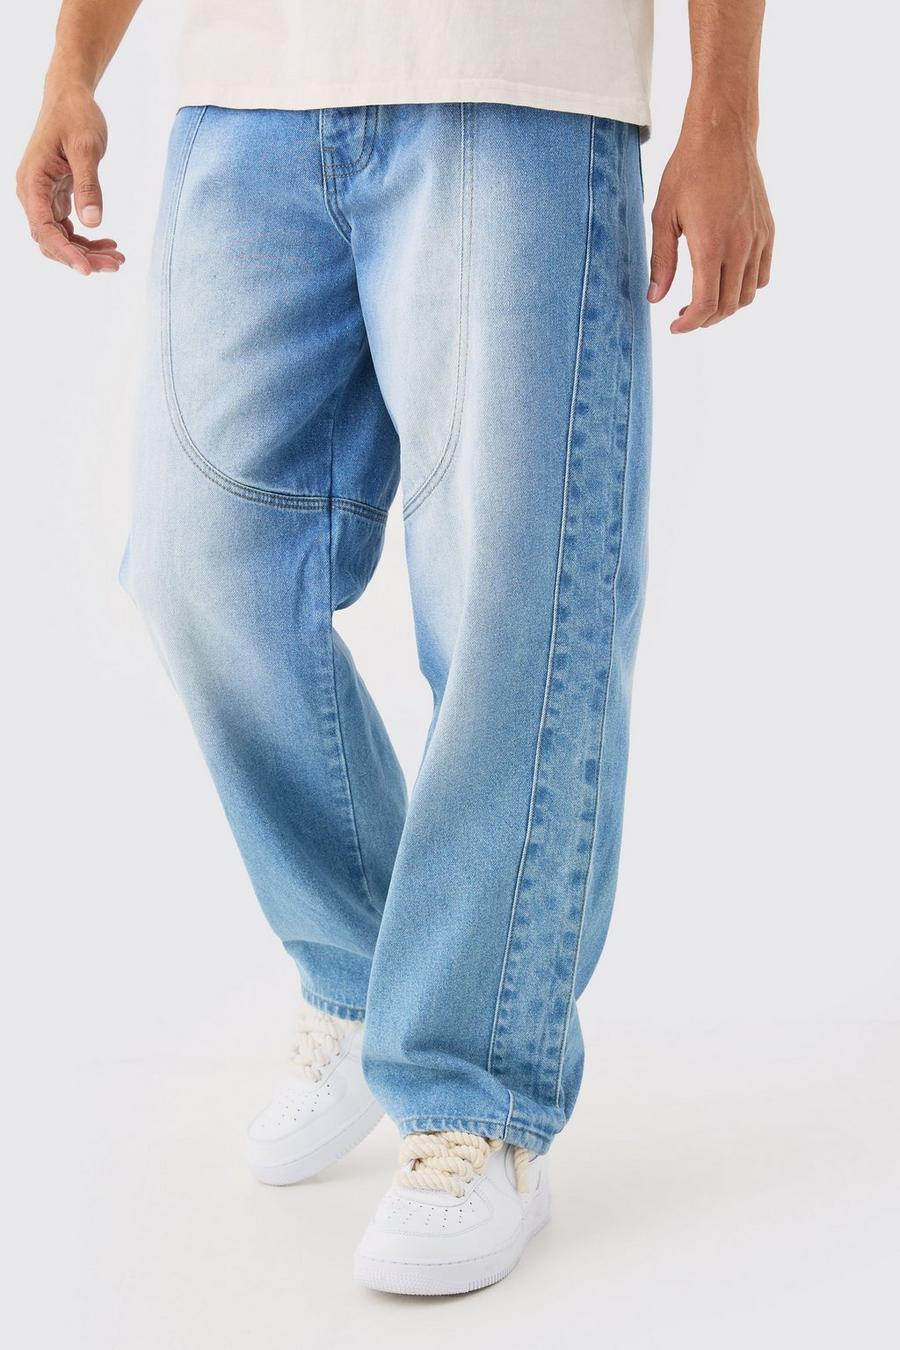 Pantaloni stile Western rilassati in denim rigido blu chiaro, Light blue